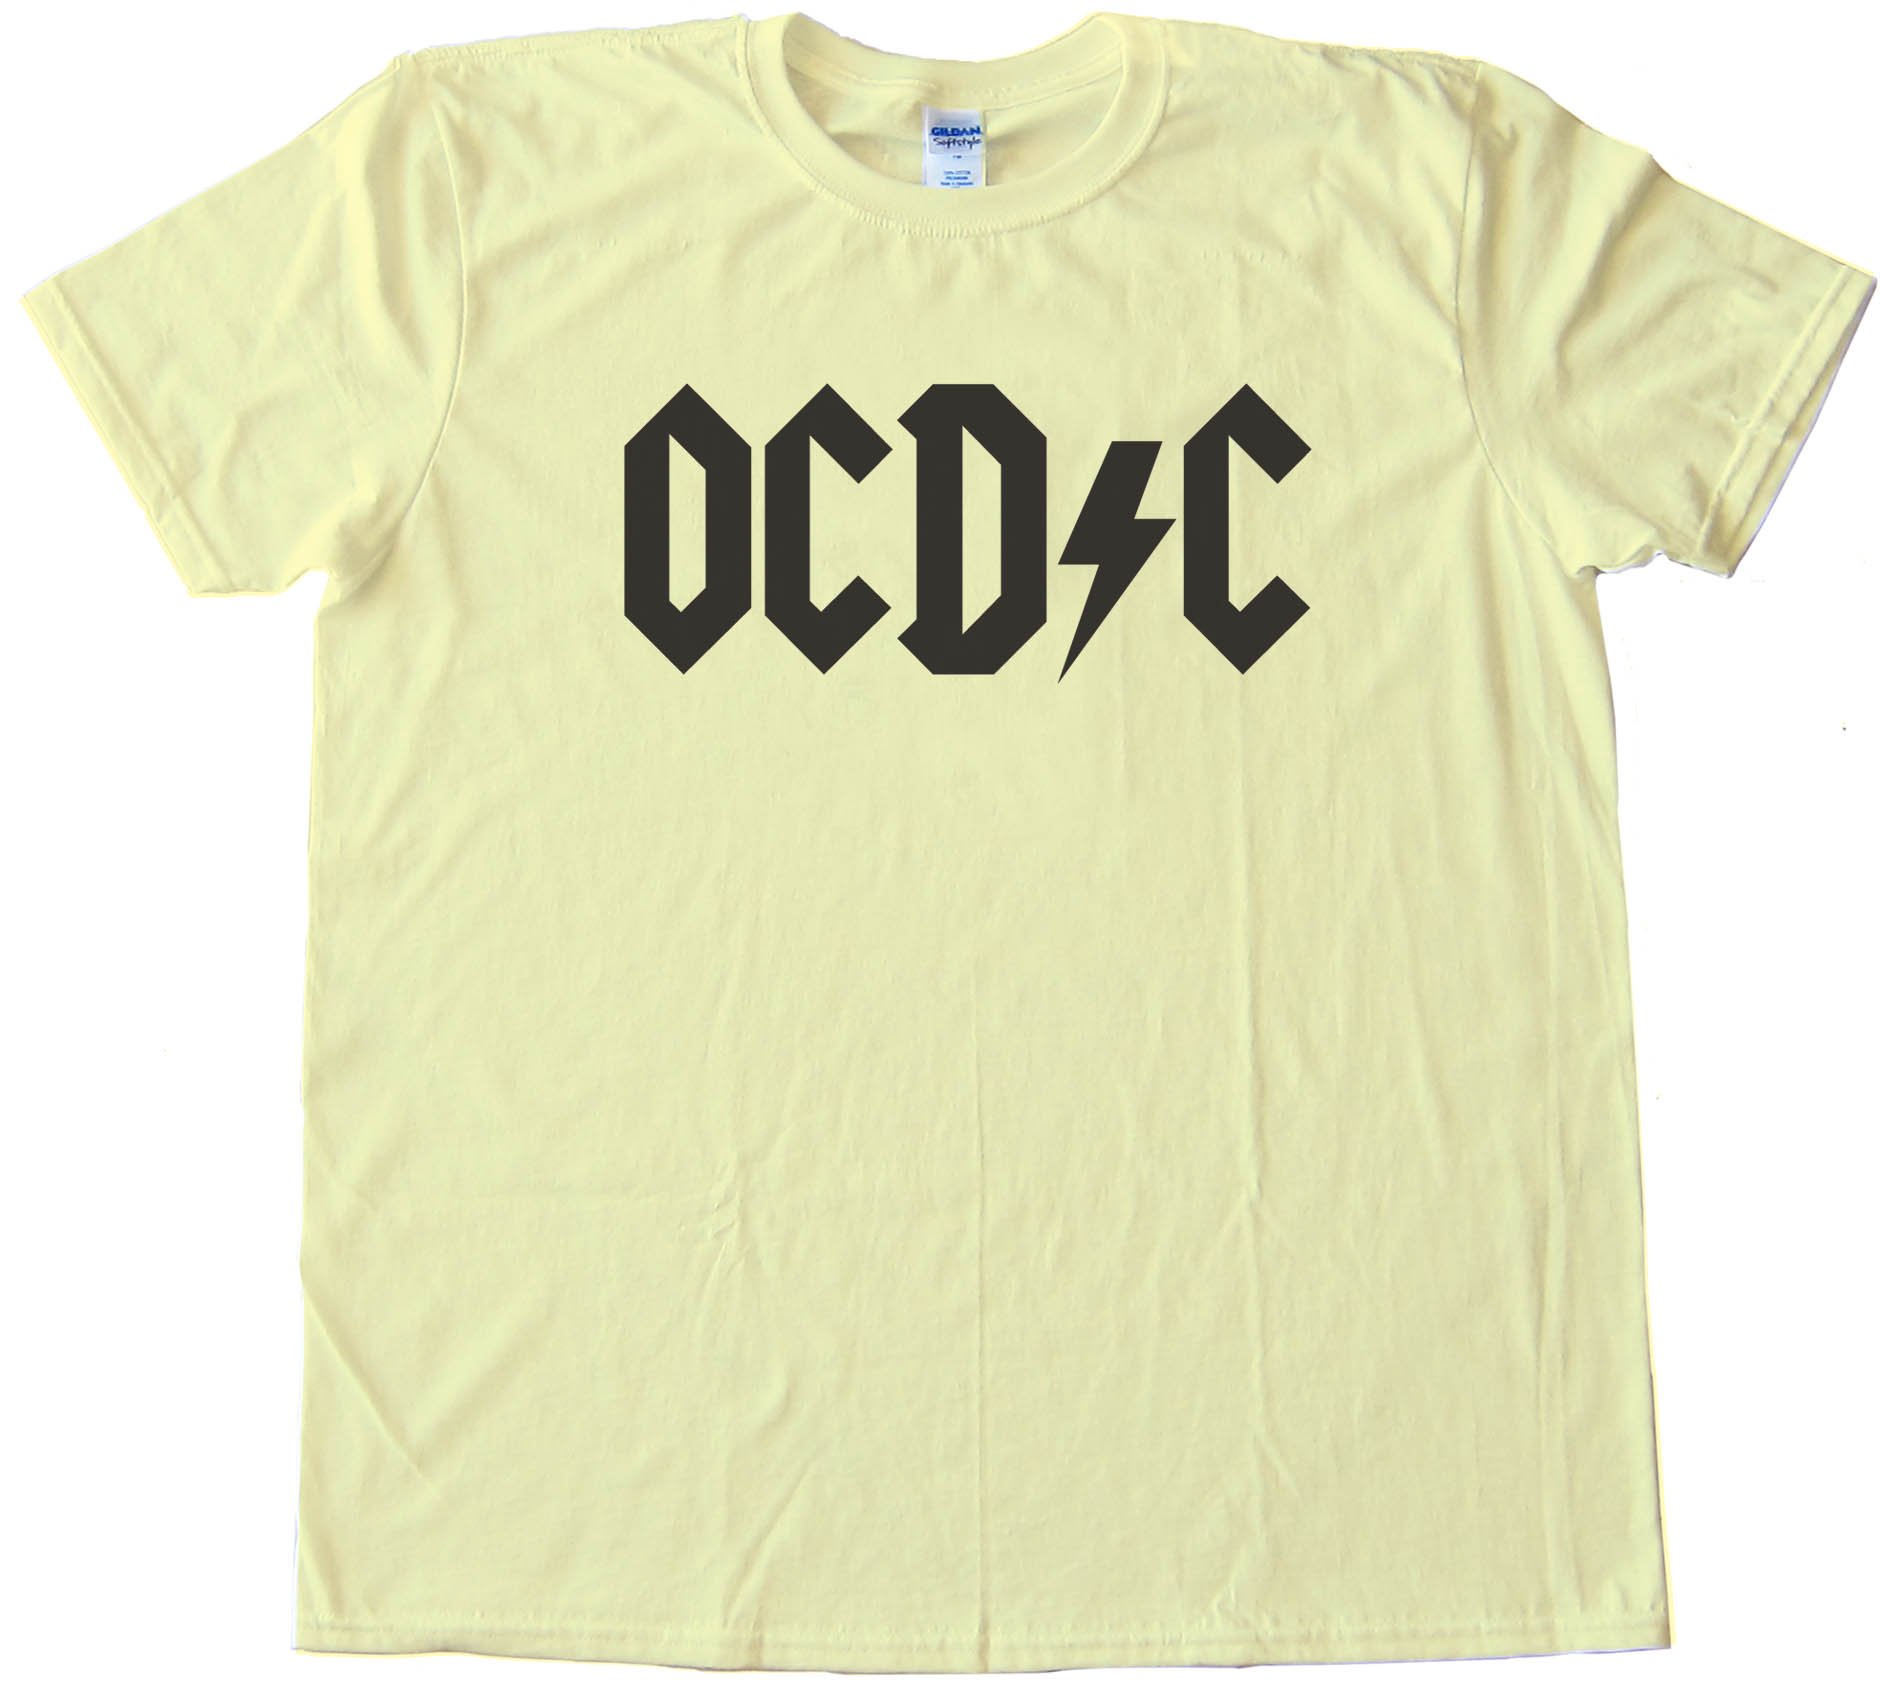 Ocd-C Obsessive Compulsive Disorder - Tee Shirt